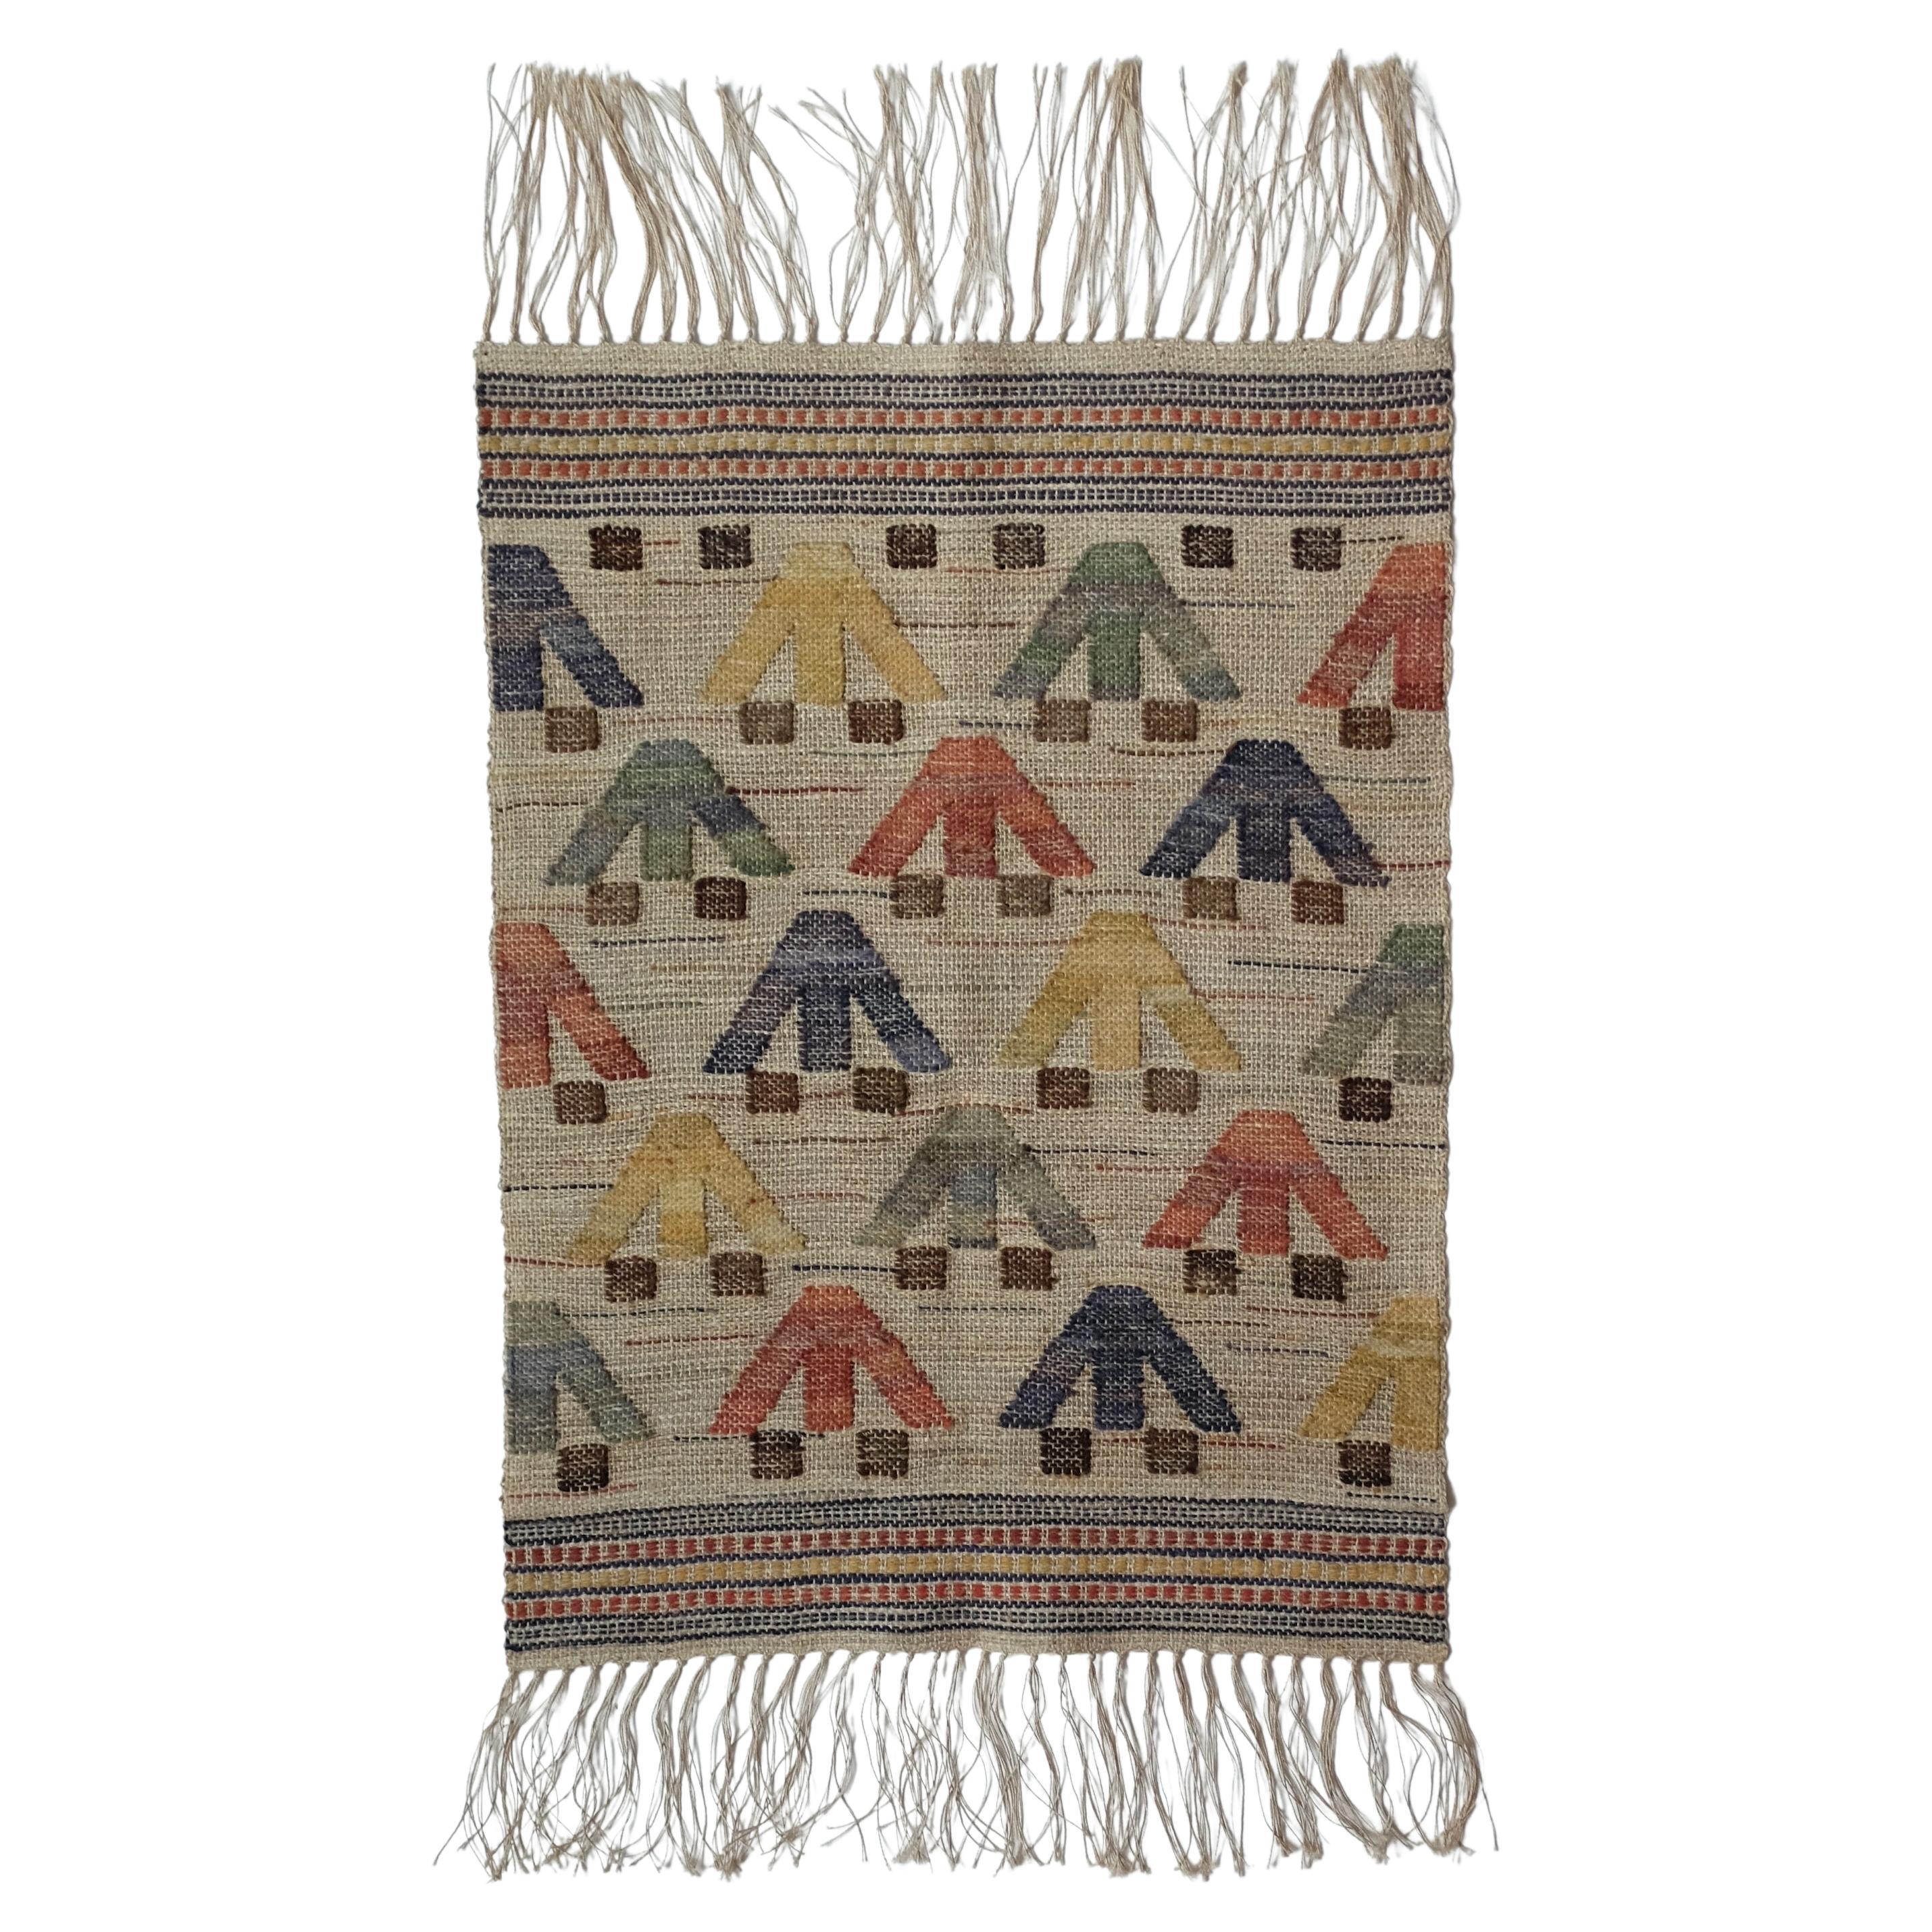 Vintage Swedish Linen and Wool Tapestry in the Style of Märta Måås Fjetterström